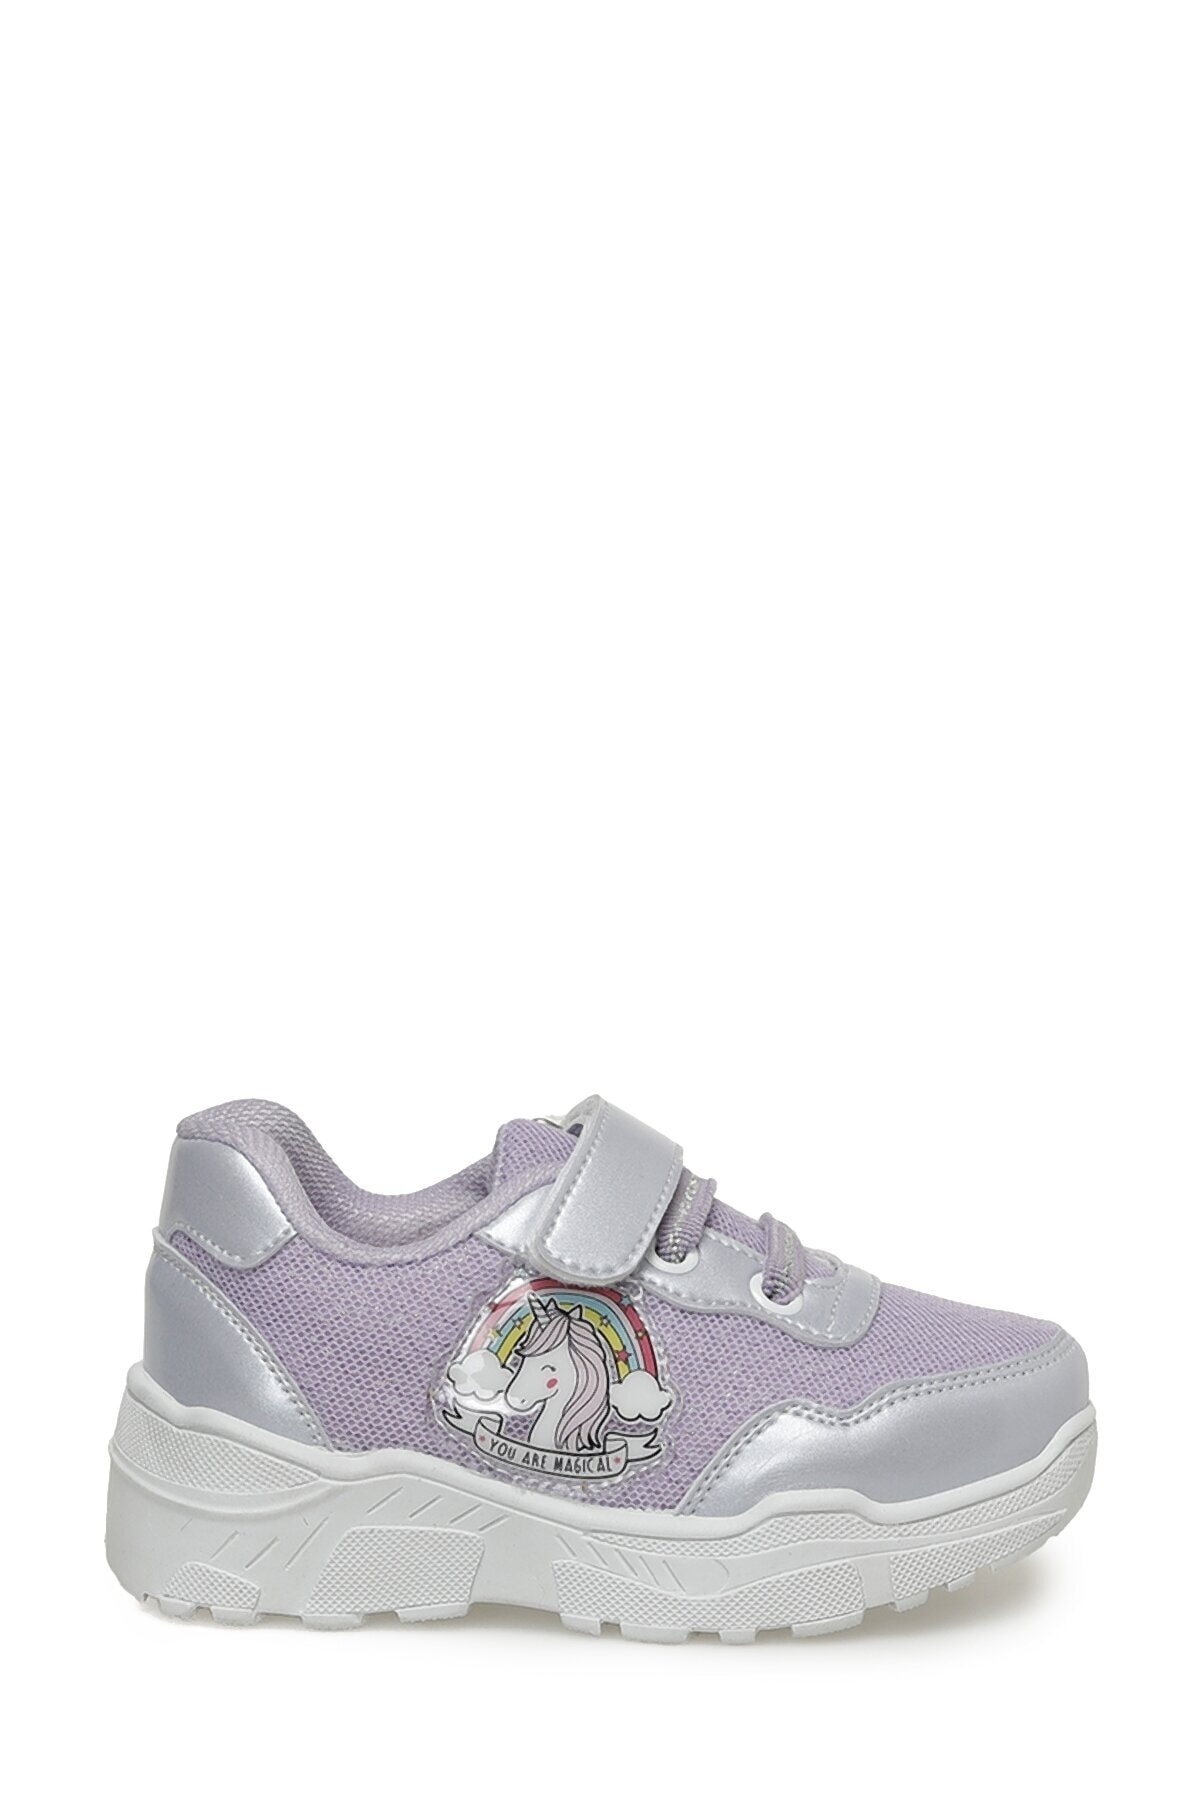 Levně Polaris 624067.b3fx Purple Girls' Sneakers